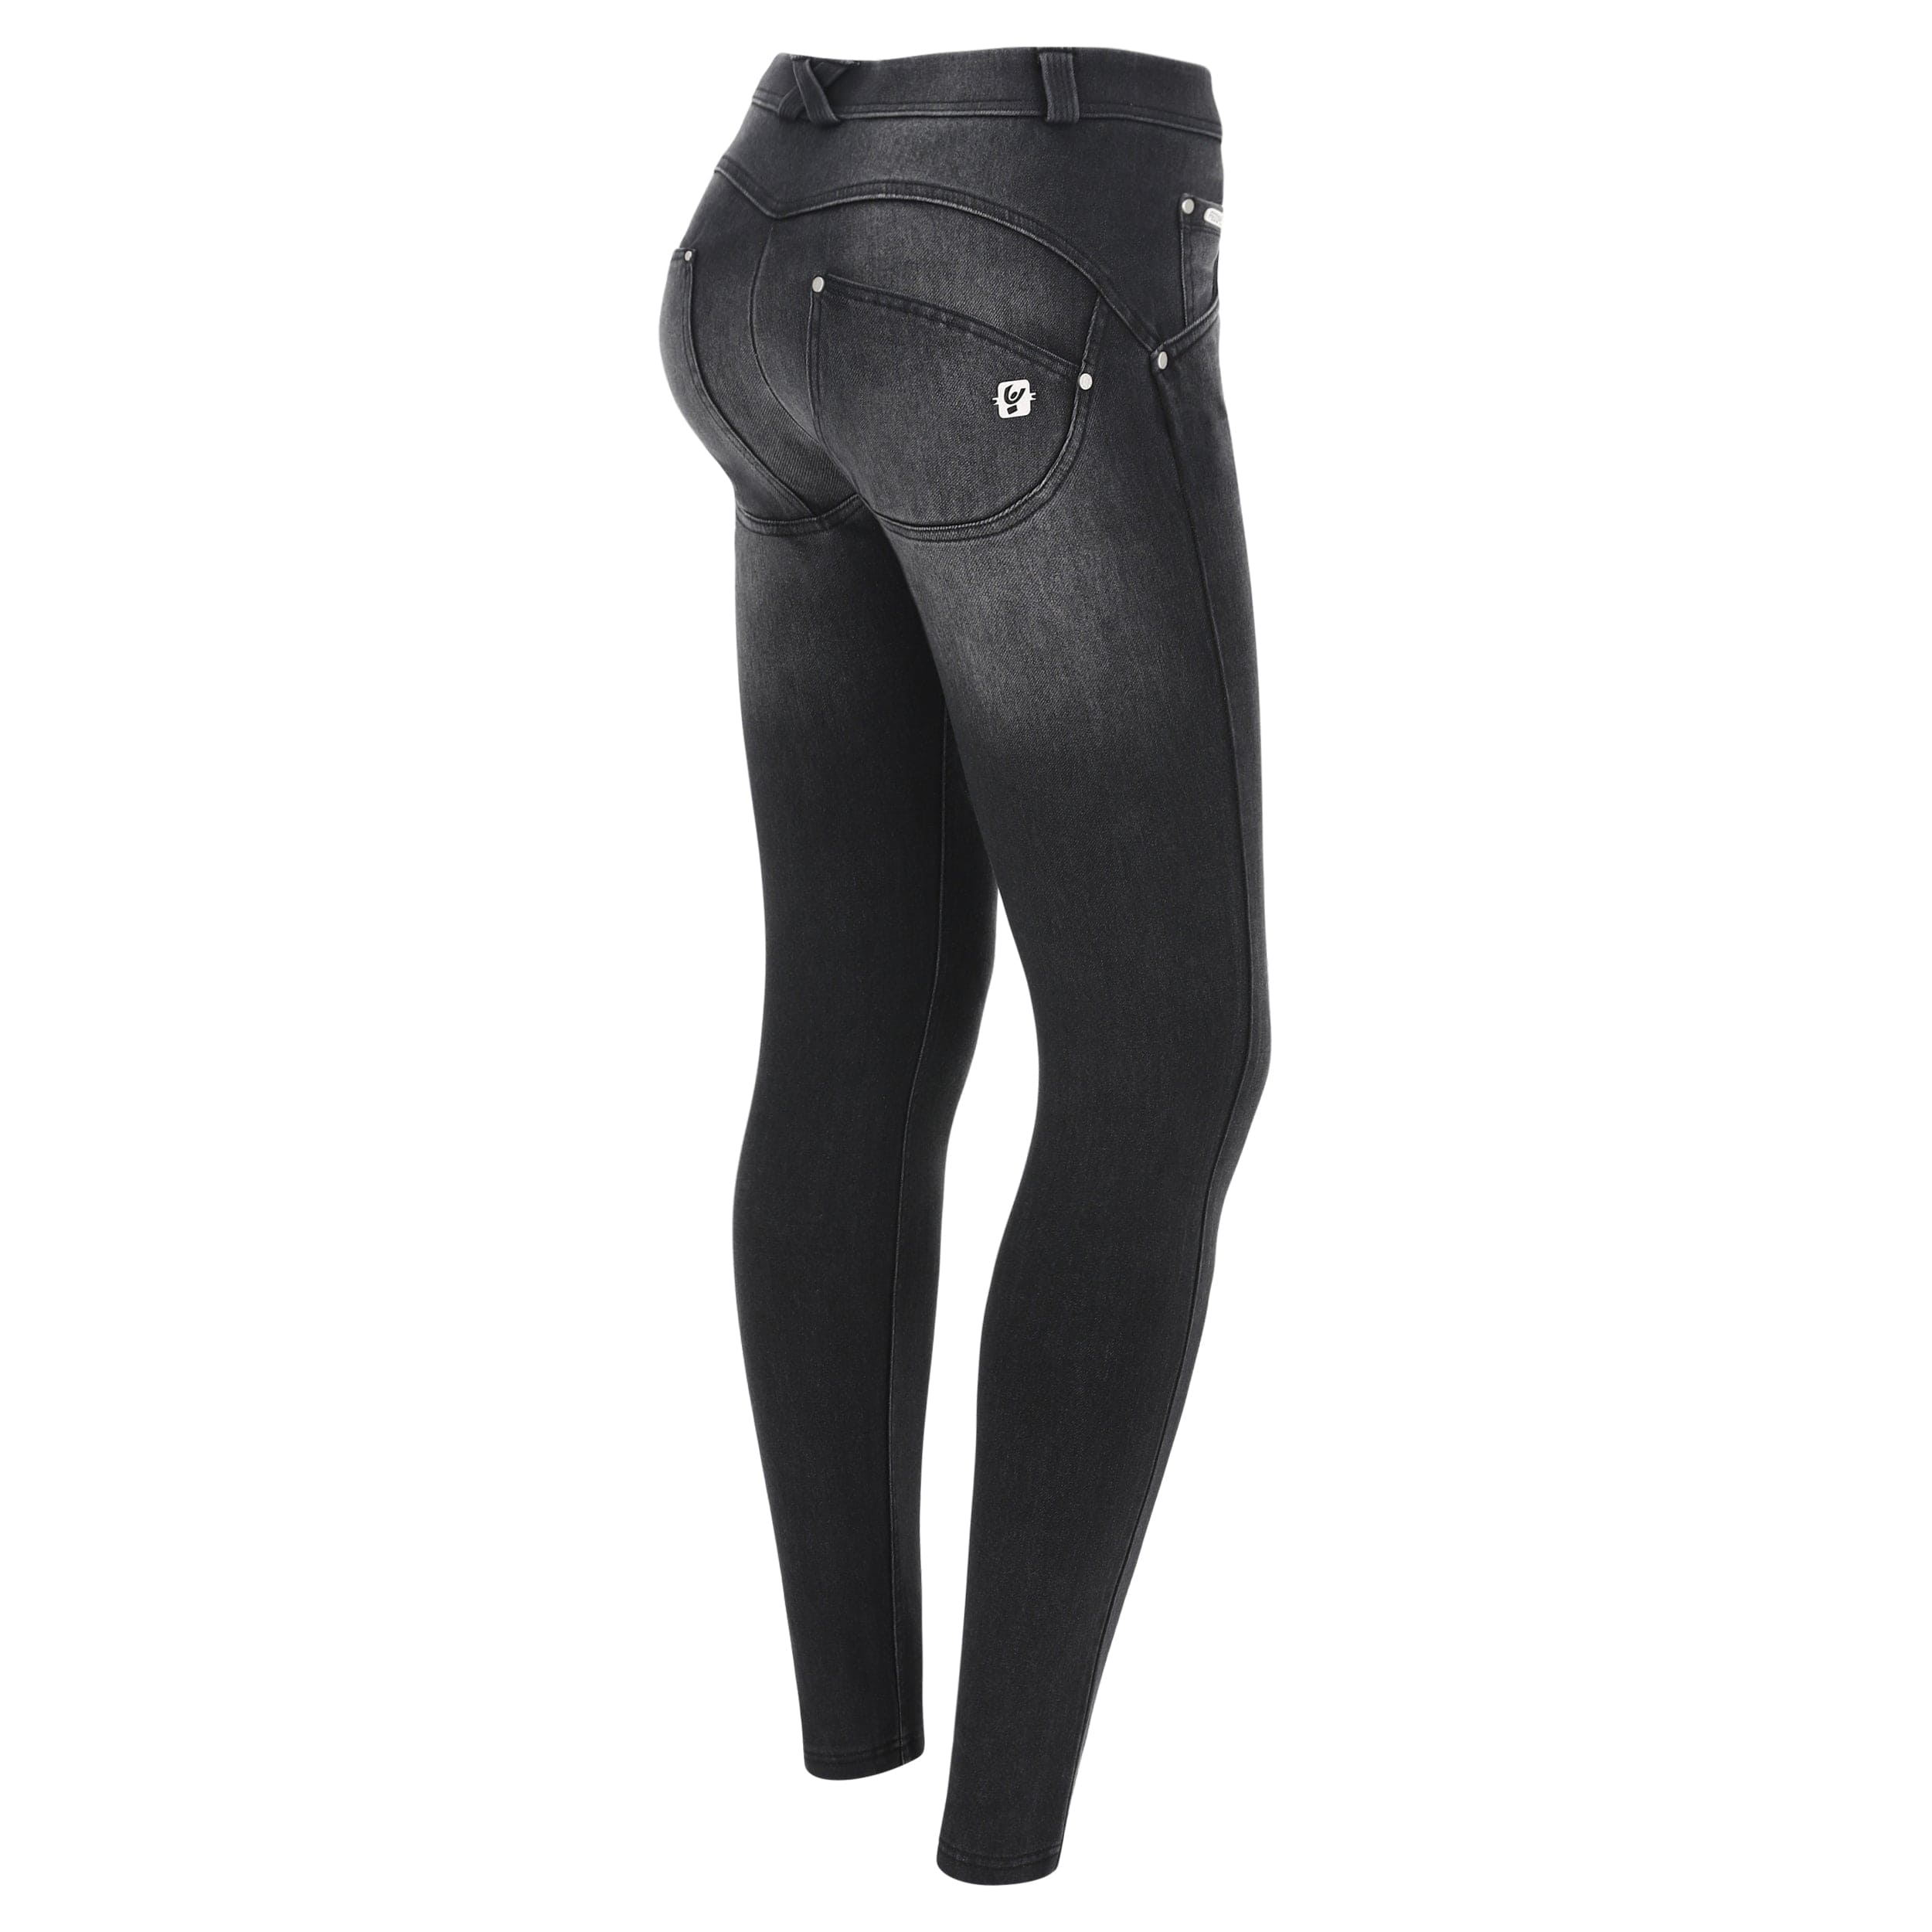 WR.UP® SNUG Jeans - Mid Rise - Full Length - Black + Black Stitching 1